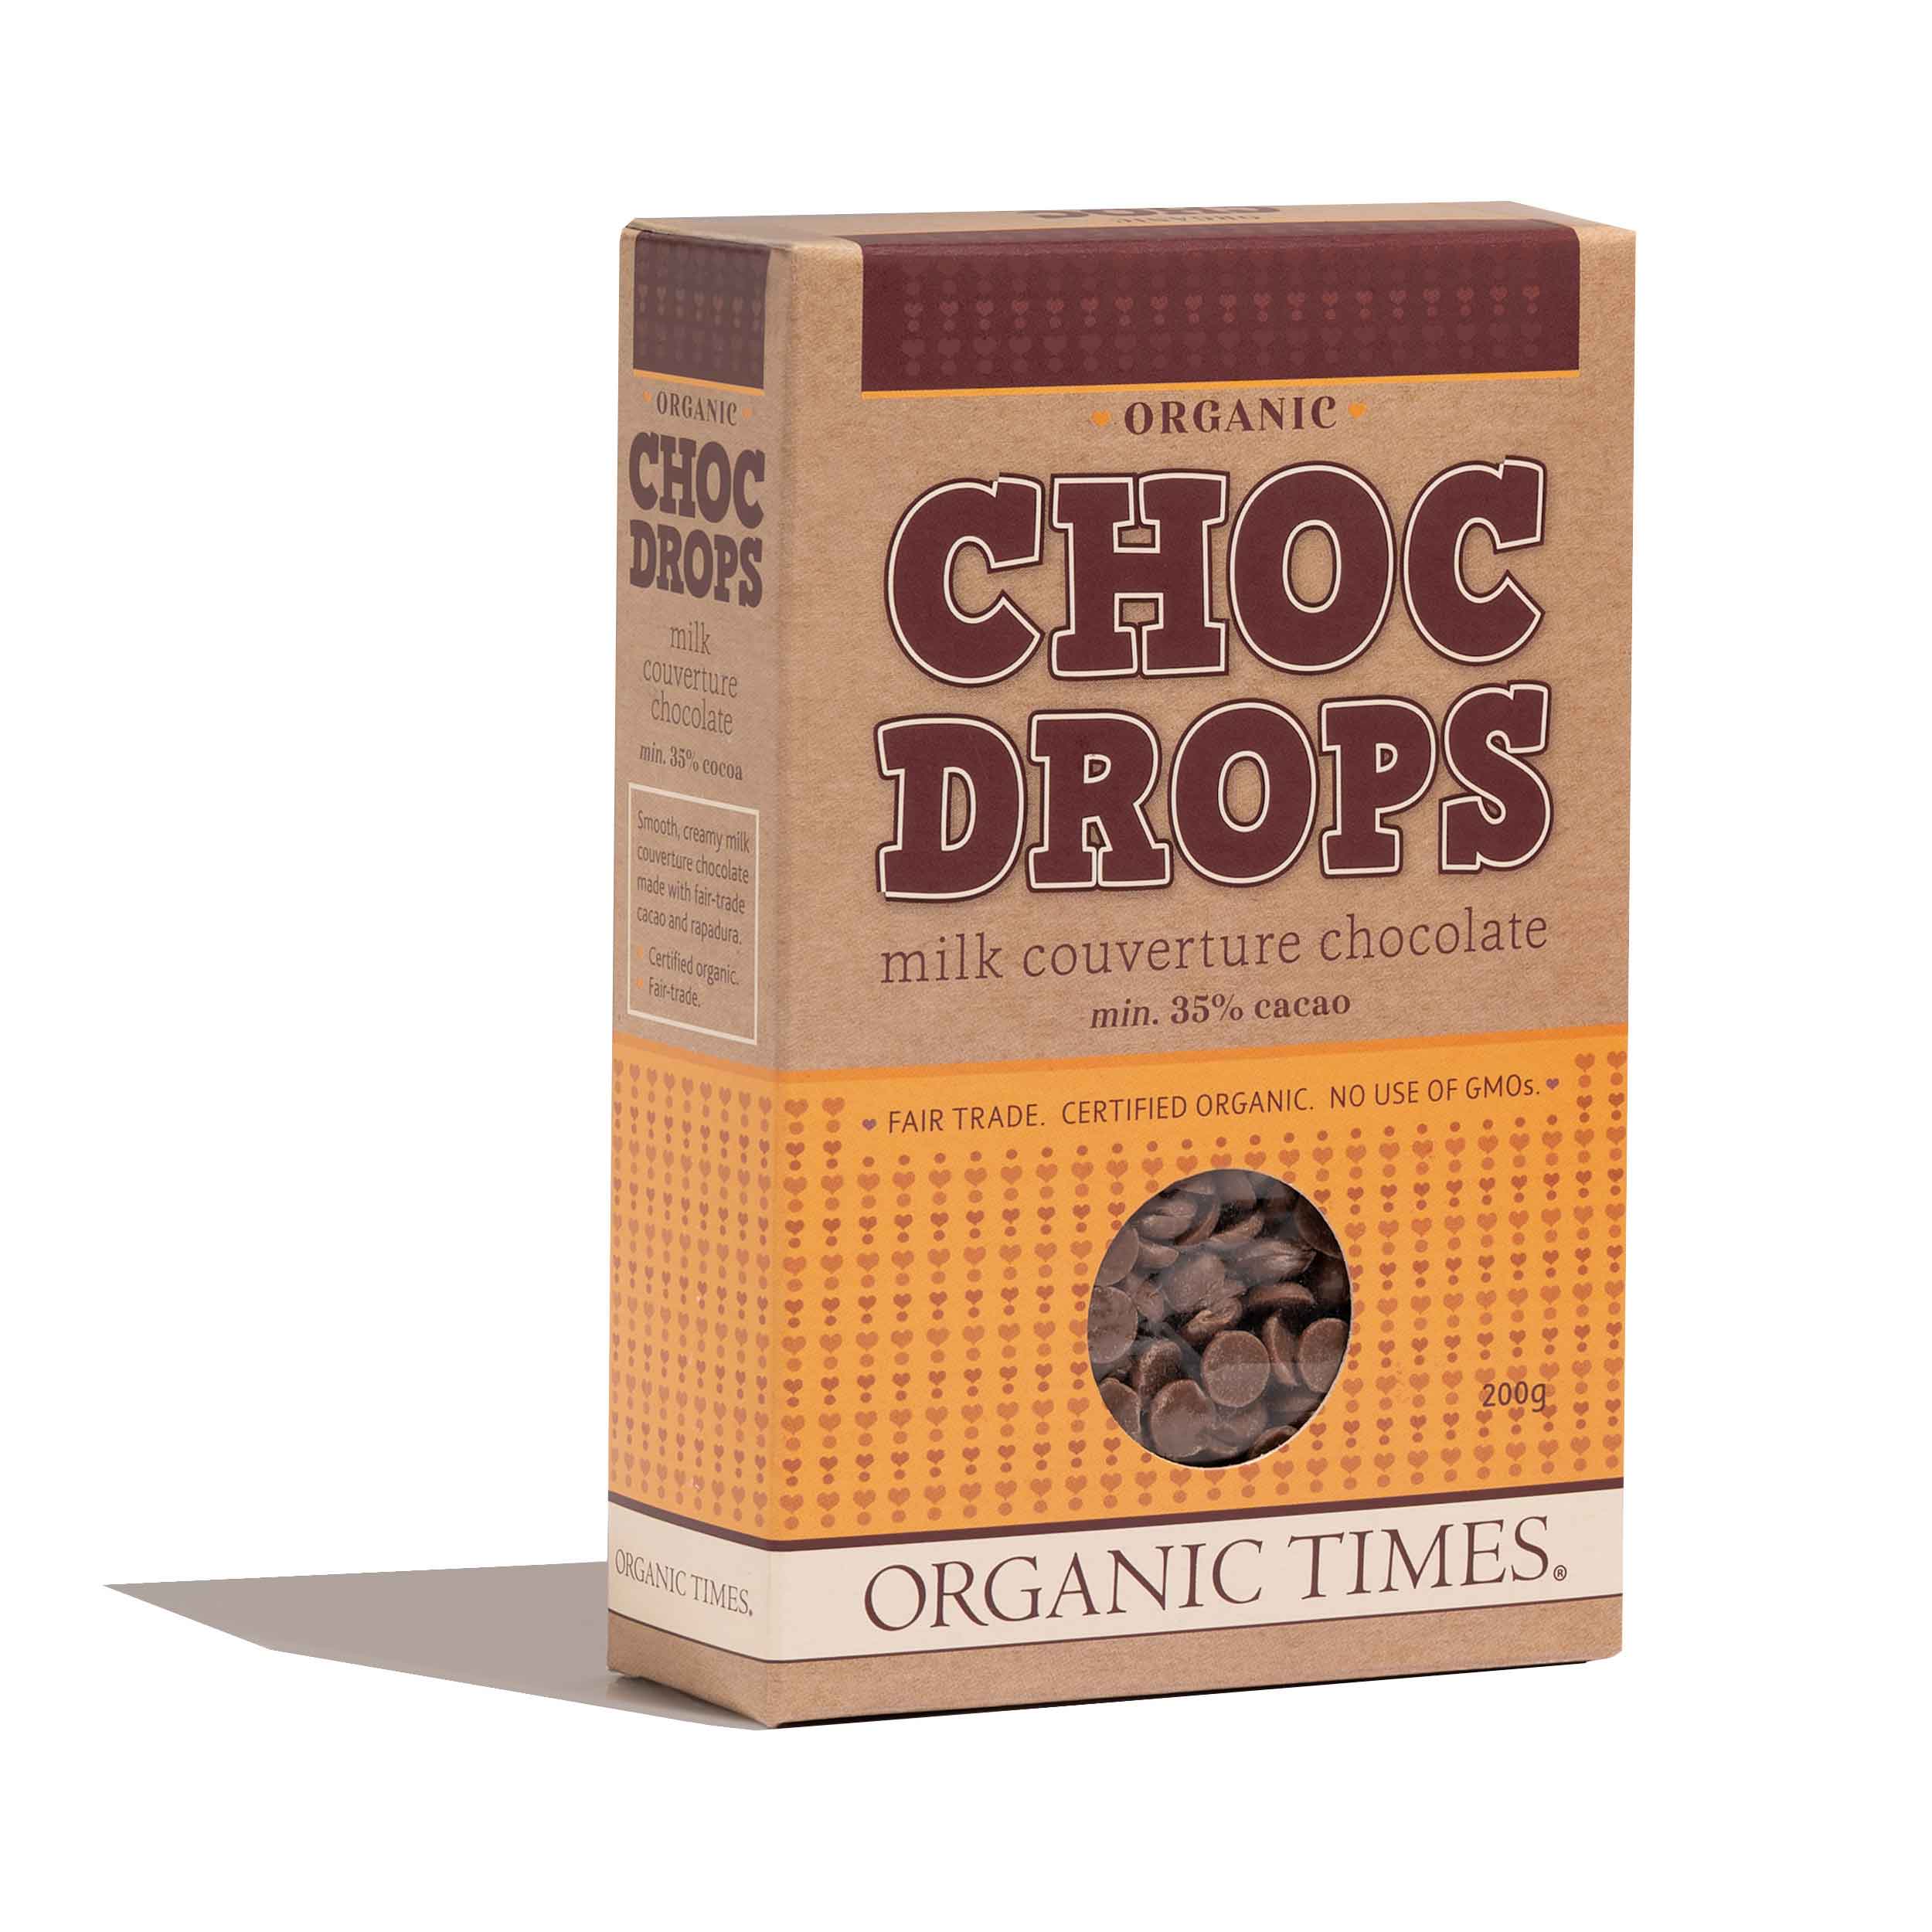 Organic Times Choc Drops Milk Couverture Drops